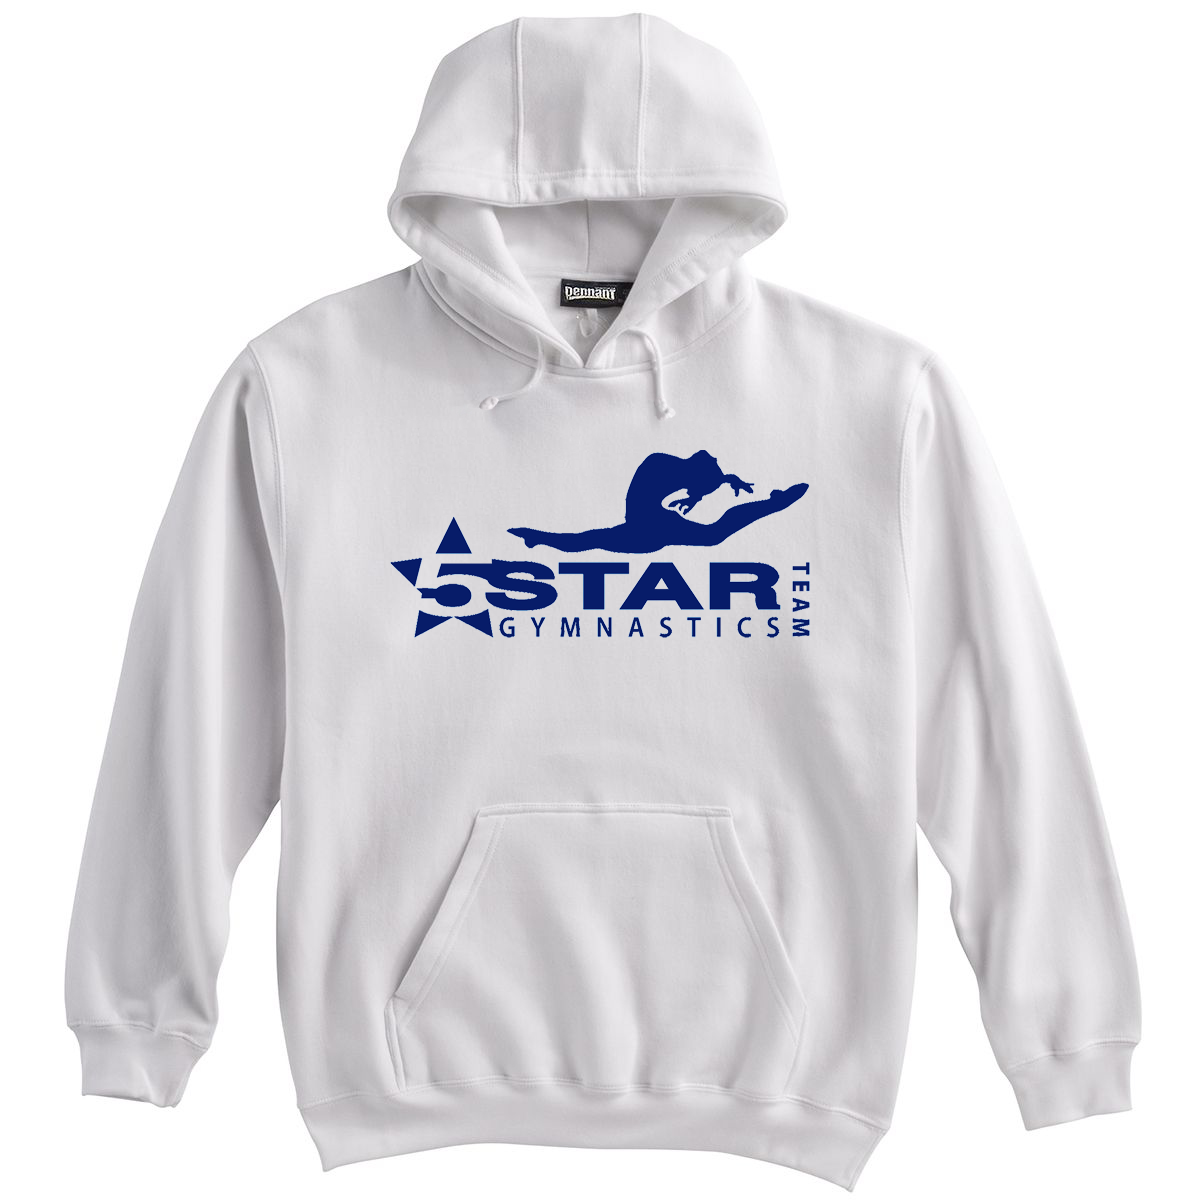 5 Star Gymnastics Sweatshirt